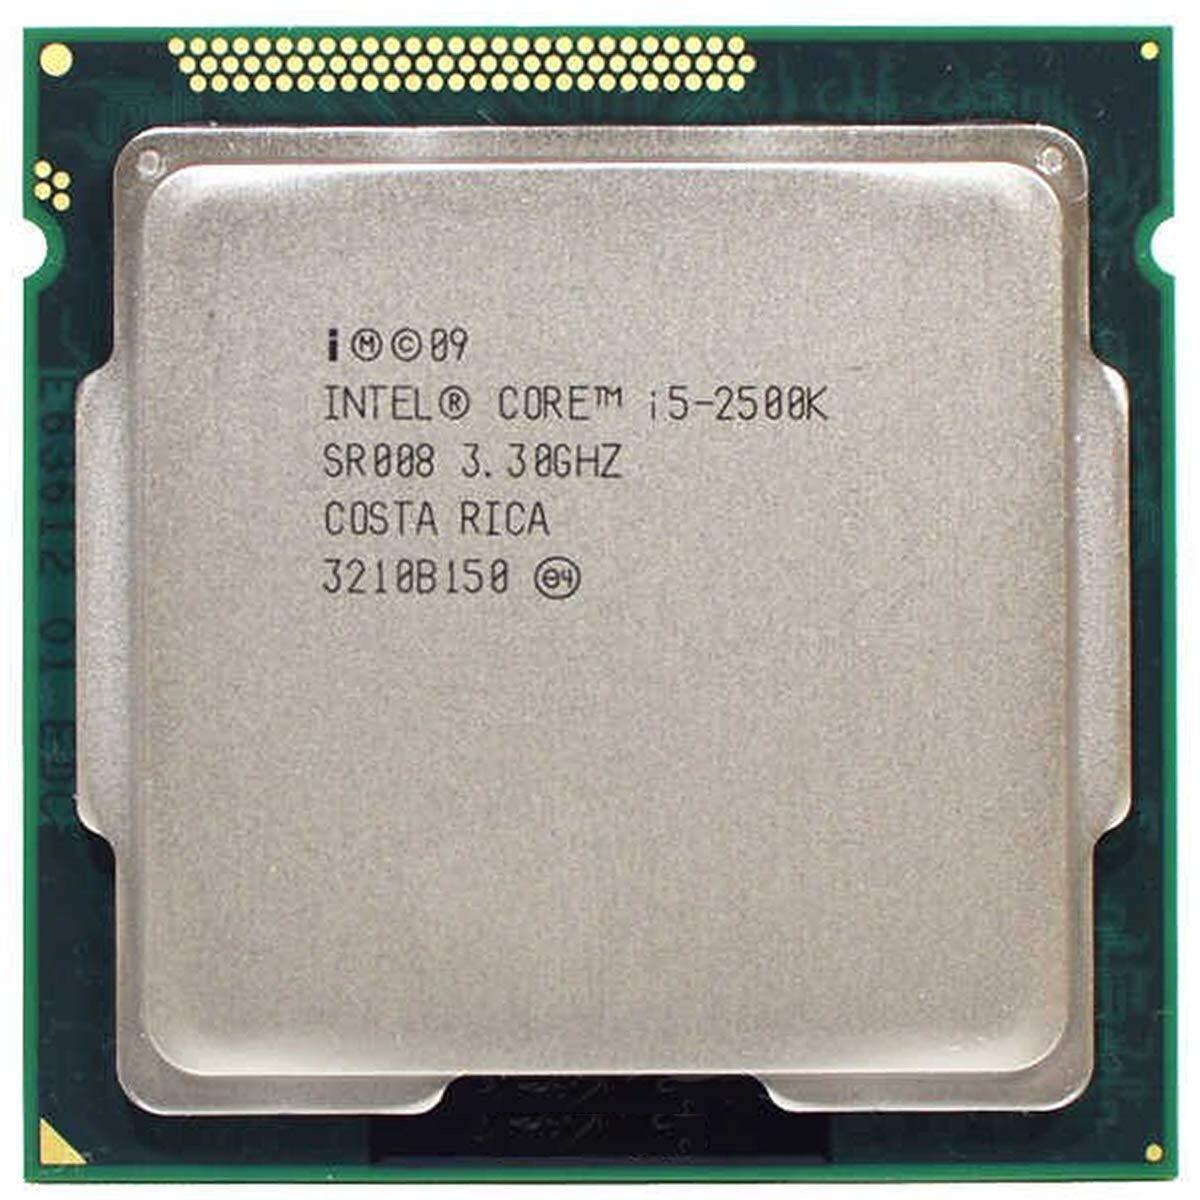 Intel Core i5-2500K i5-3570K i7-2600K i7-3770K LGA 1155 CPU Processor